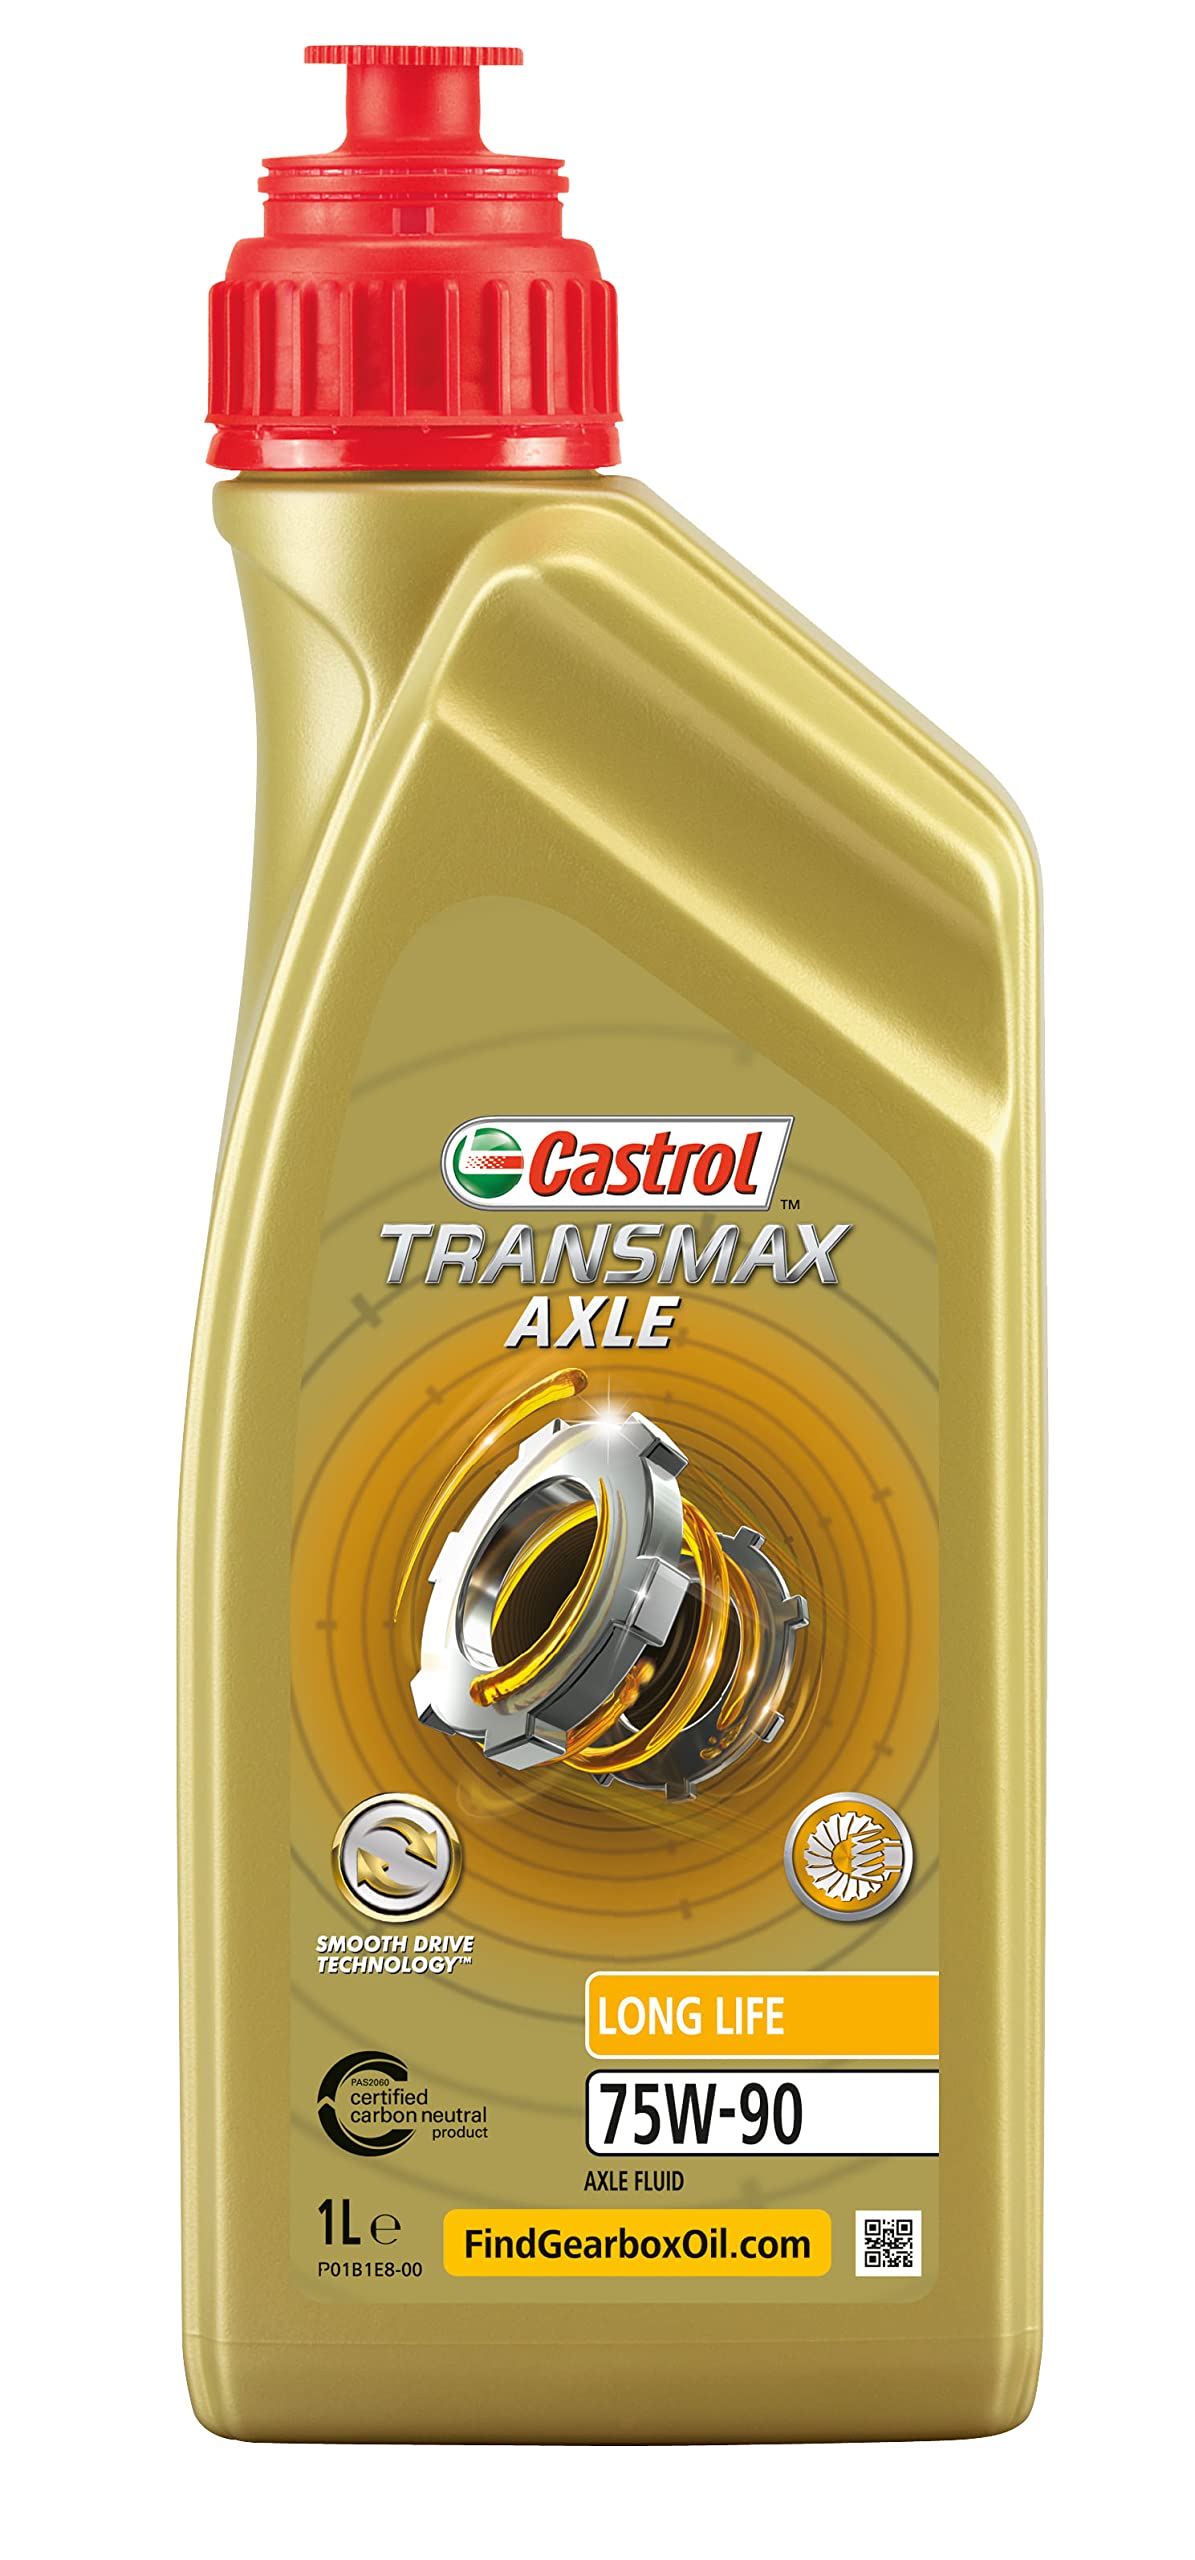 Castrol TRANSMAX Axle Long Life 75W-90, 1 Liter